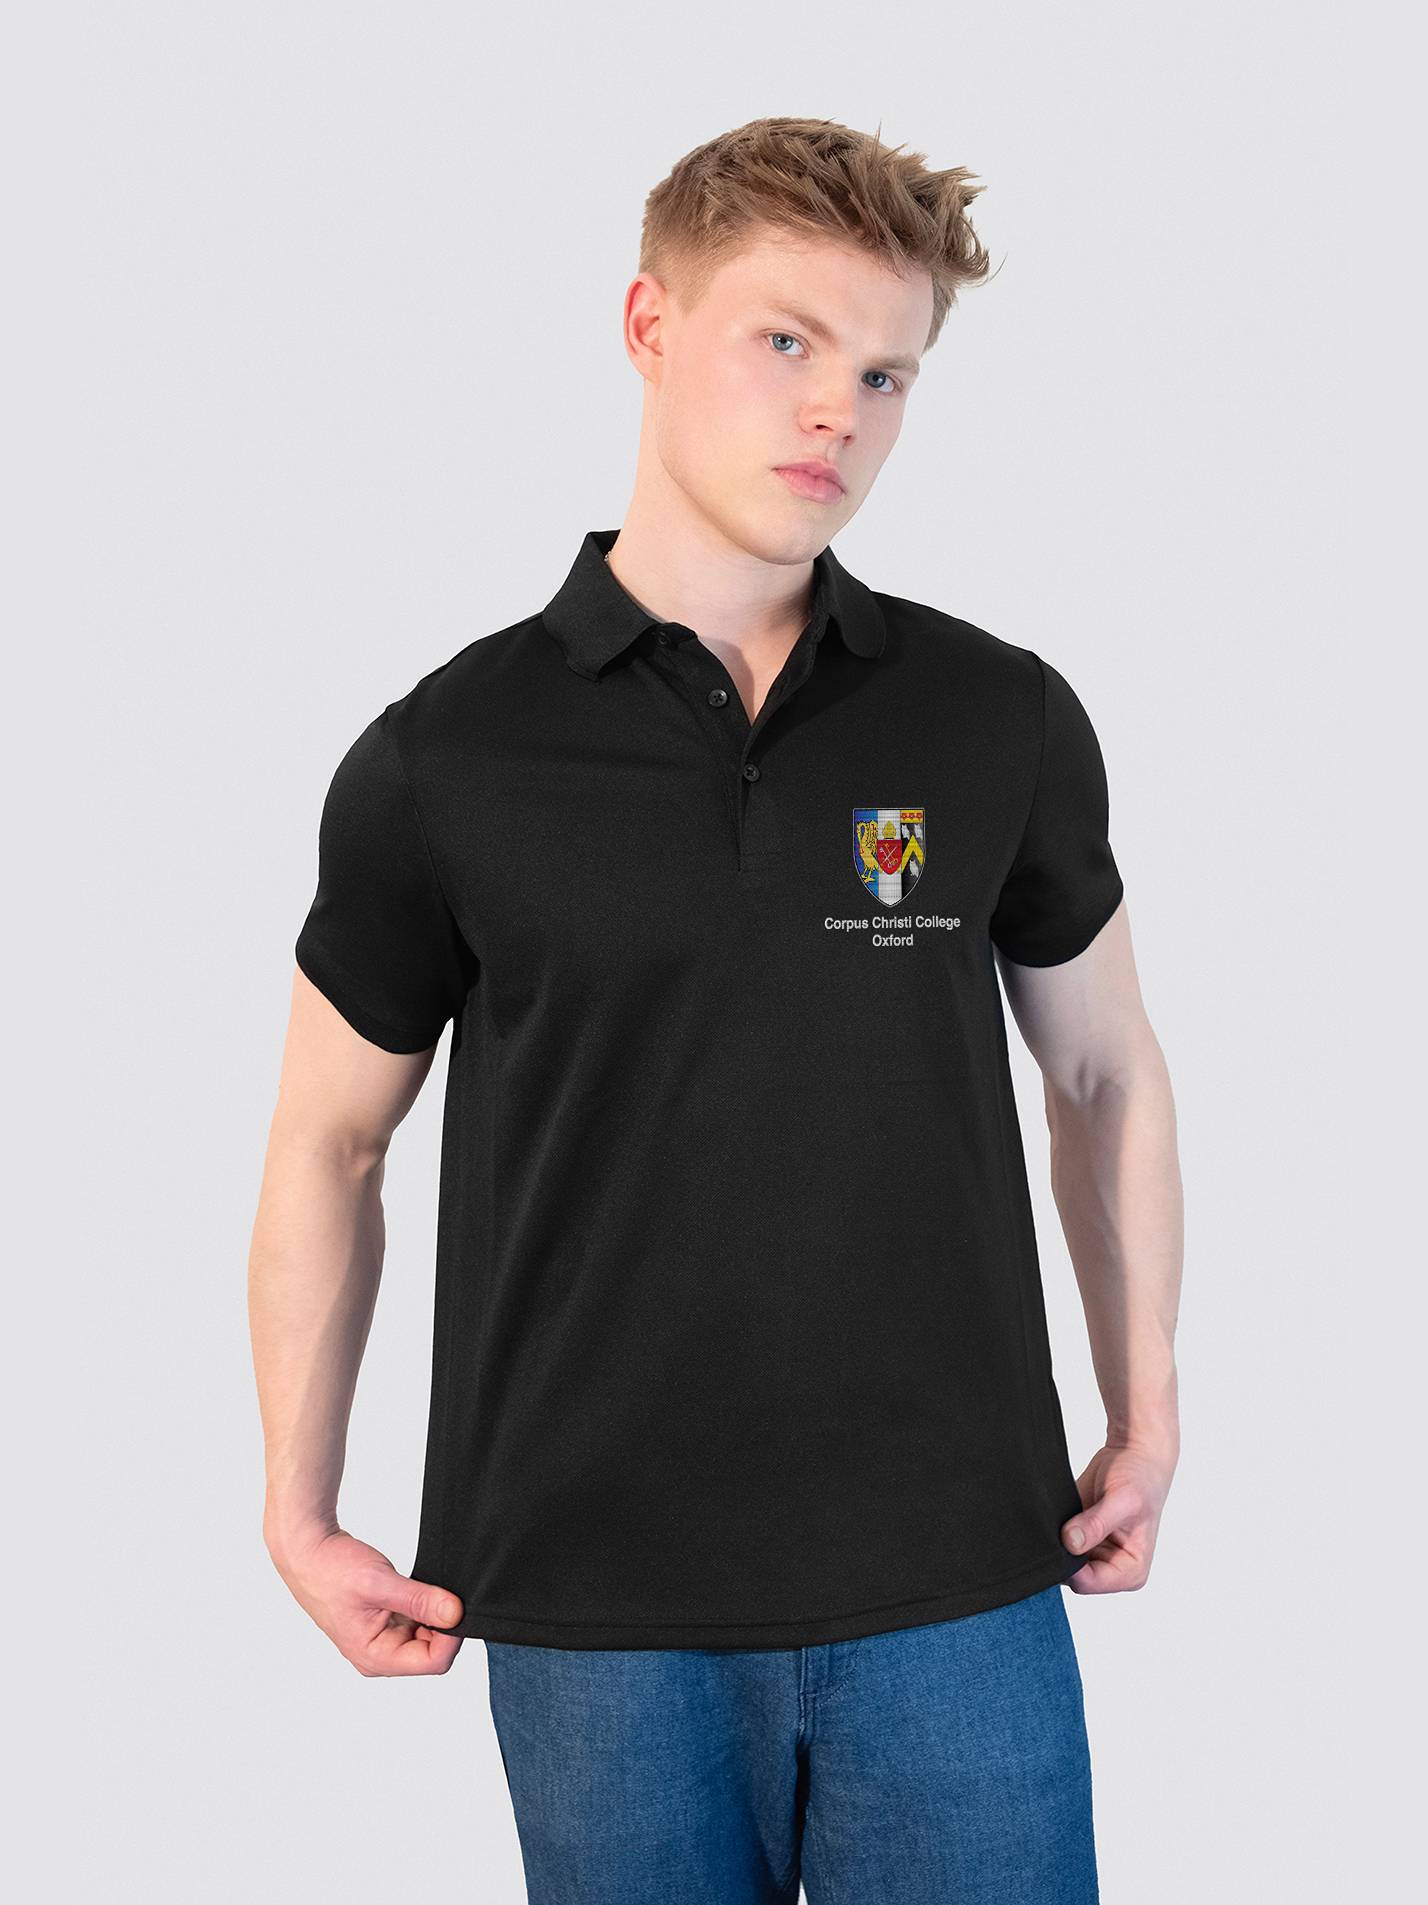 Corpus Christi College Oxford Sustainable Men's Polo Shirt